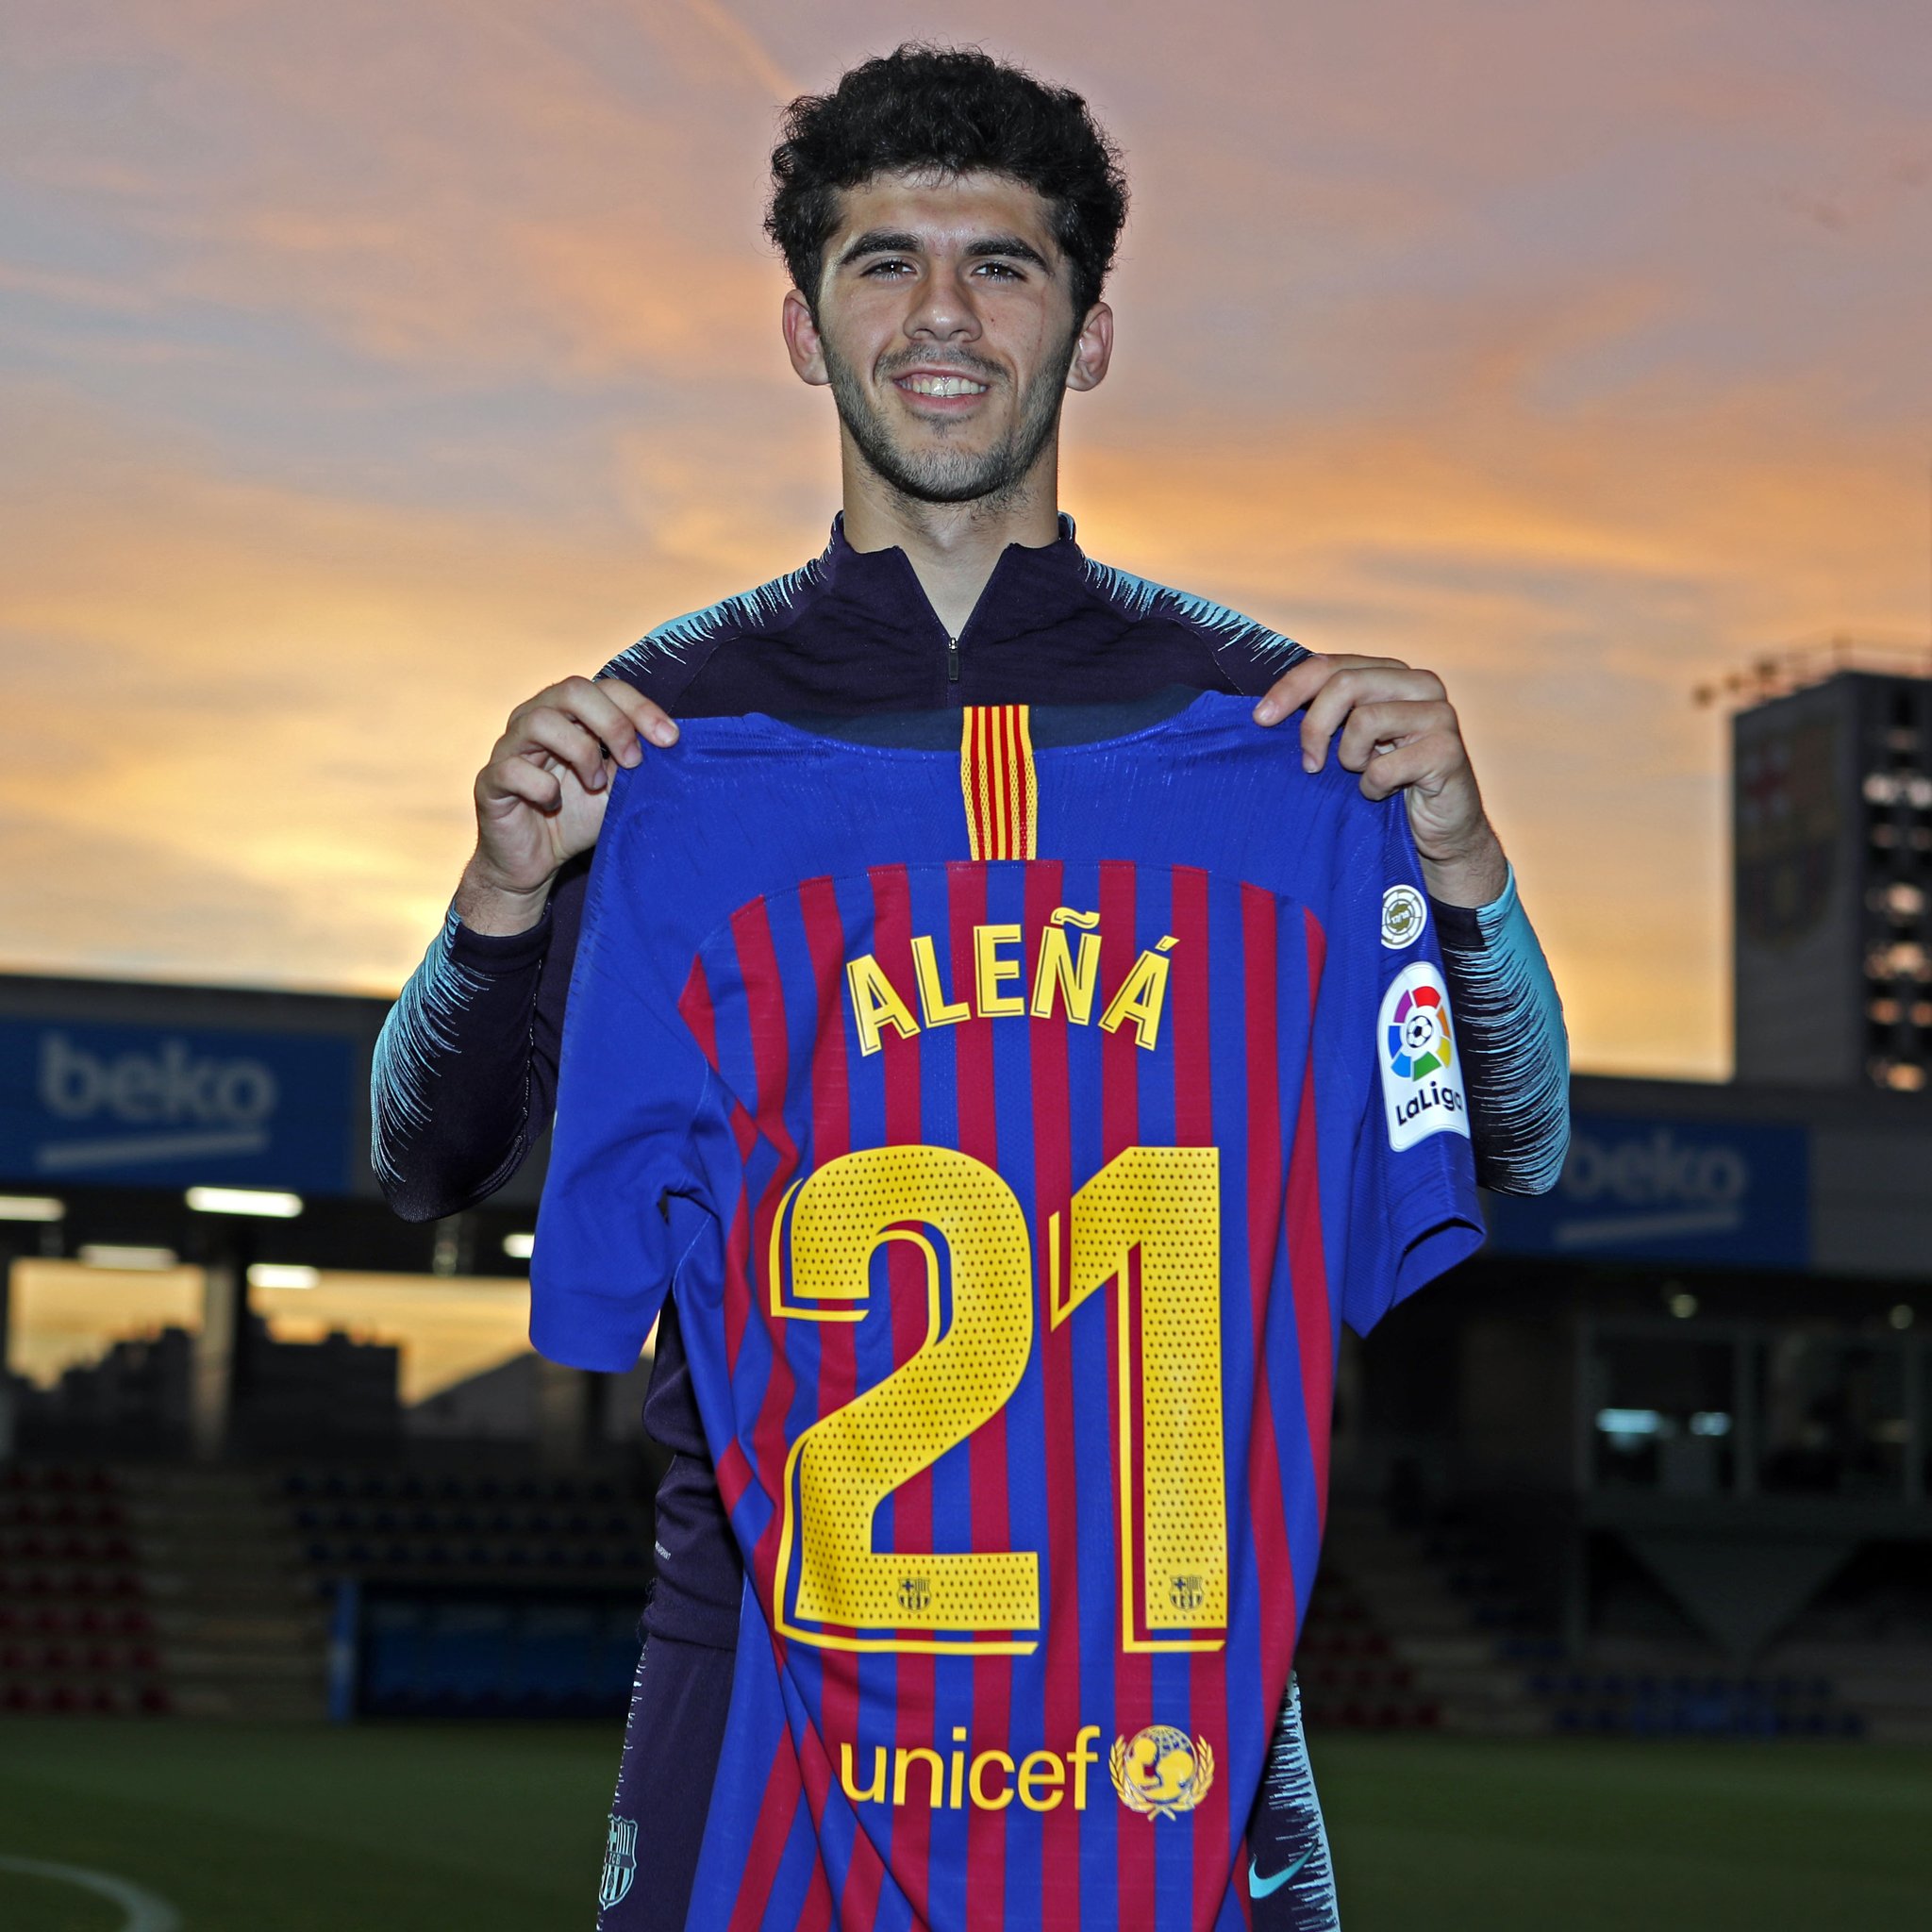 Aleña-FC Barcelona